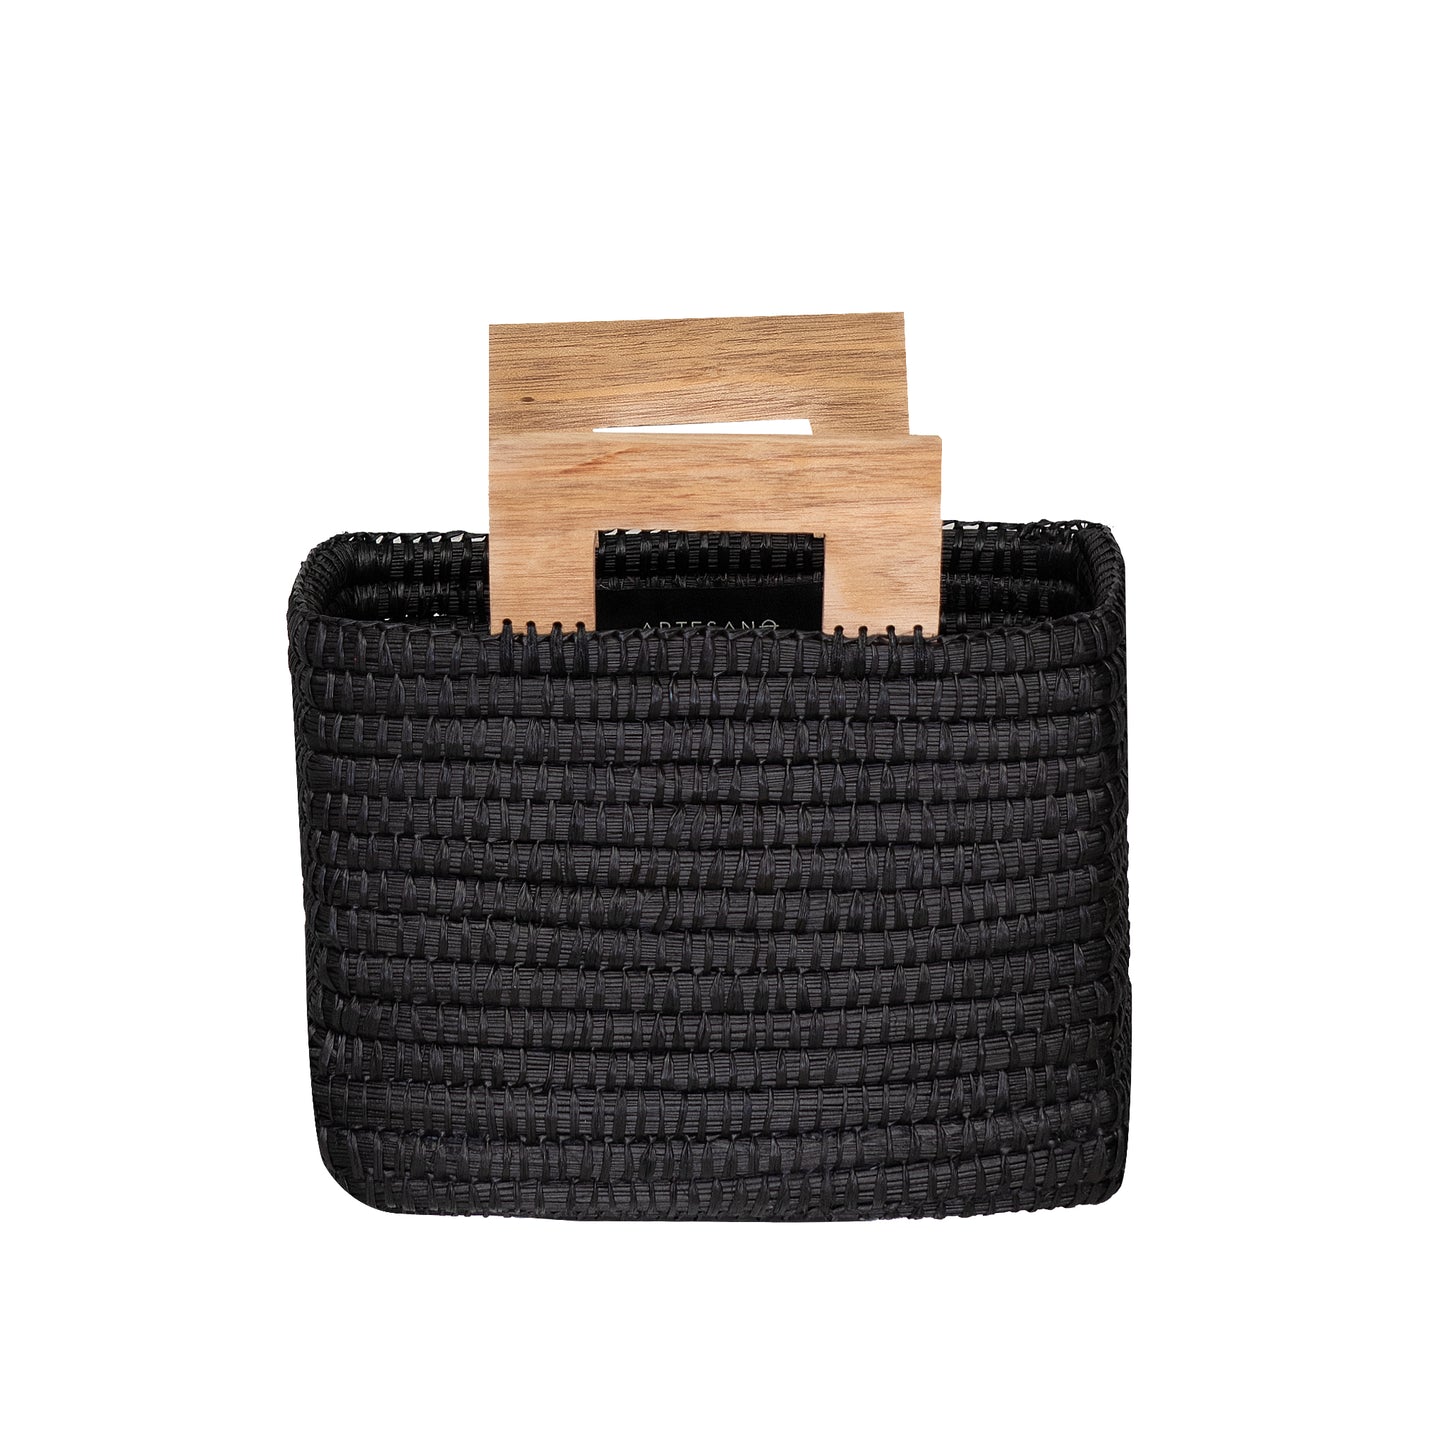 Manta Straw Bag Black & Wood Handle